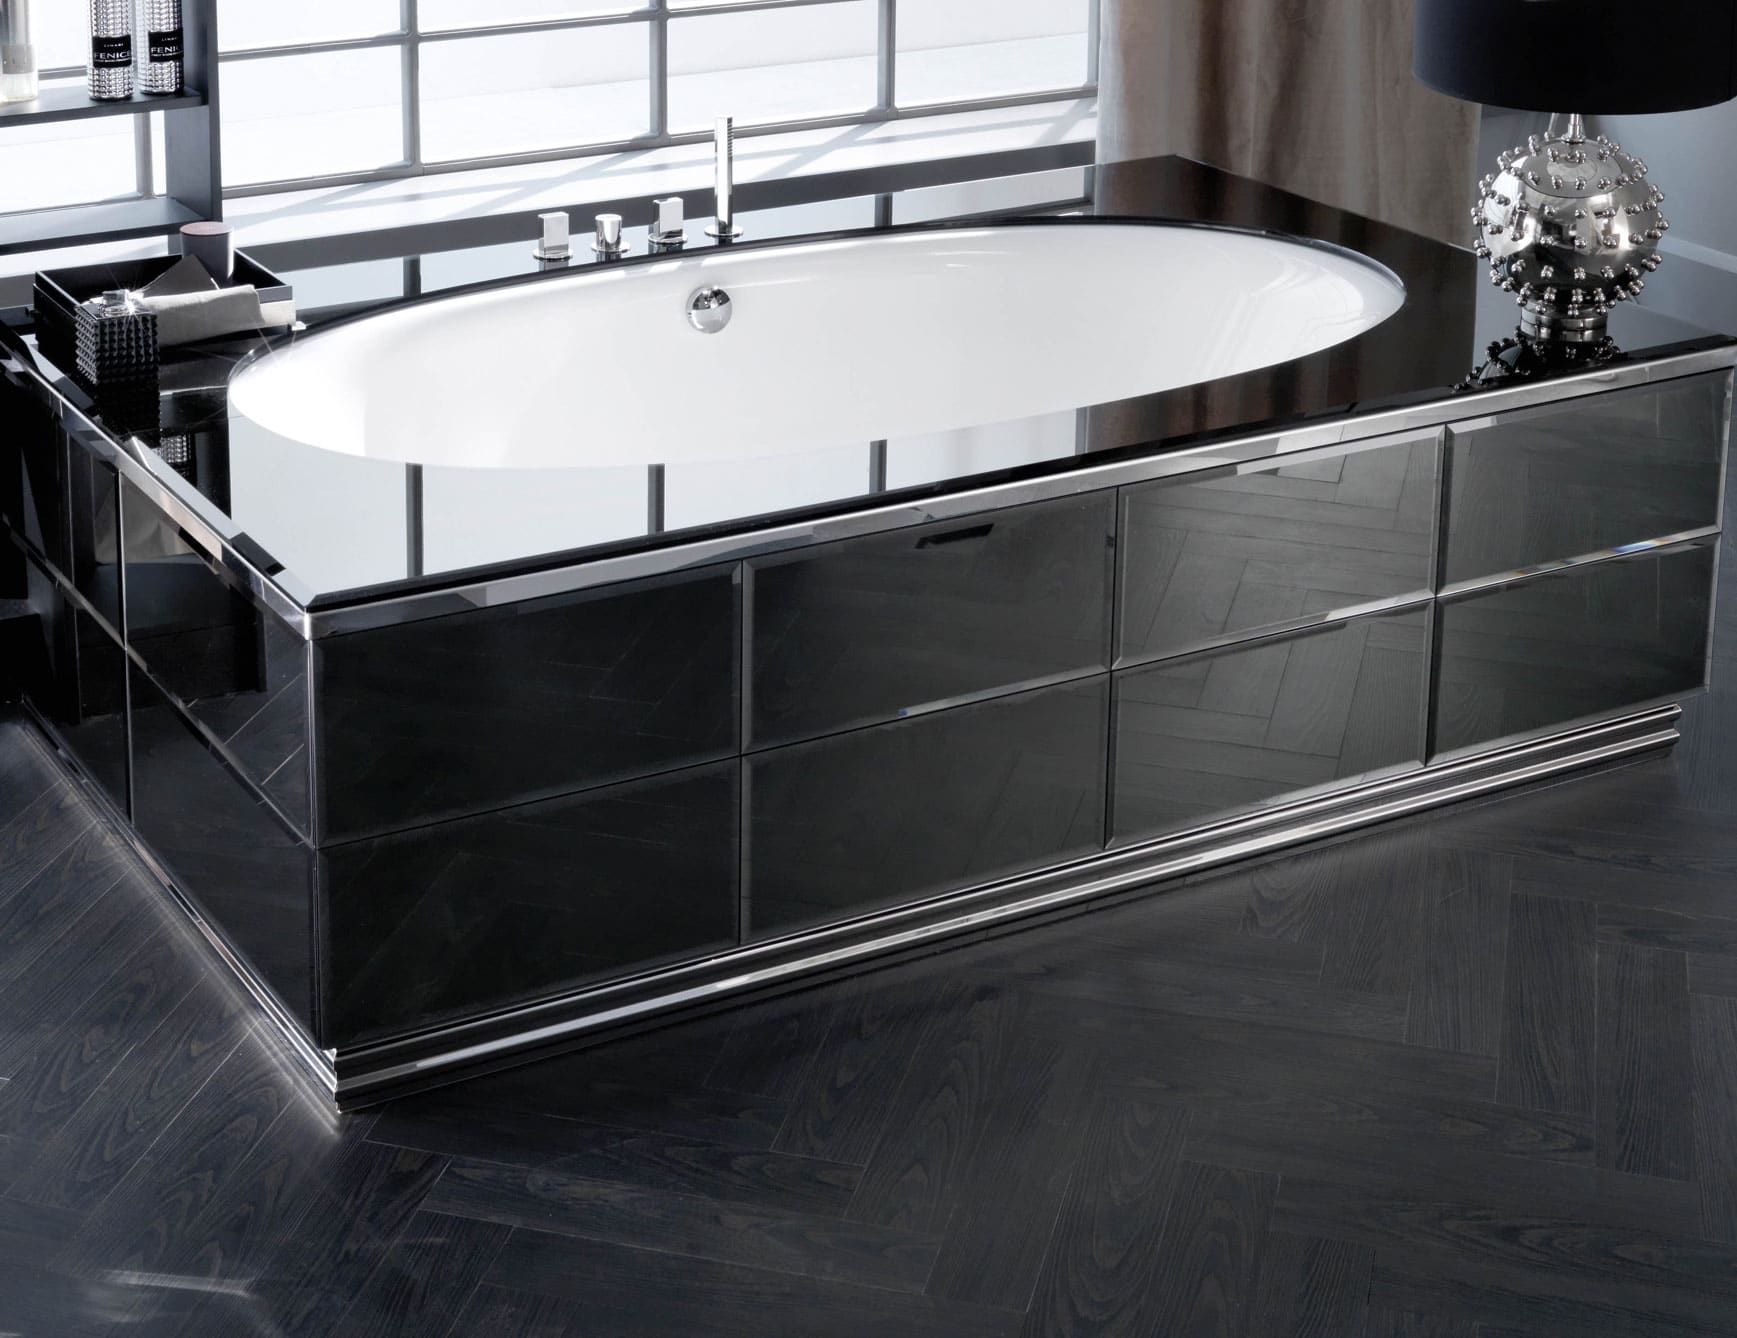 Hilton contemporary Italian bathtub with black glass